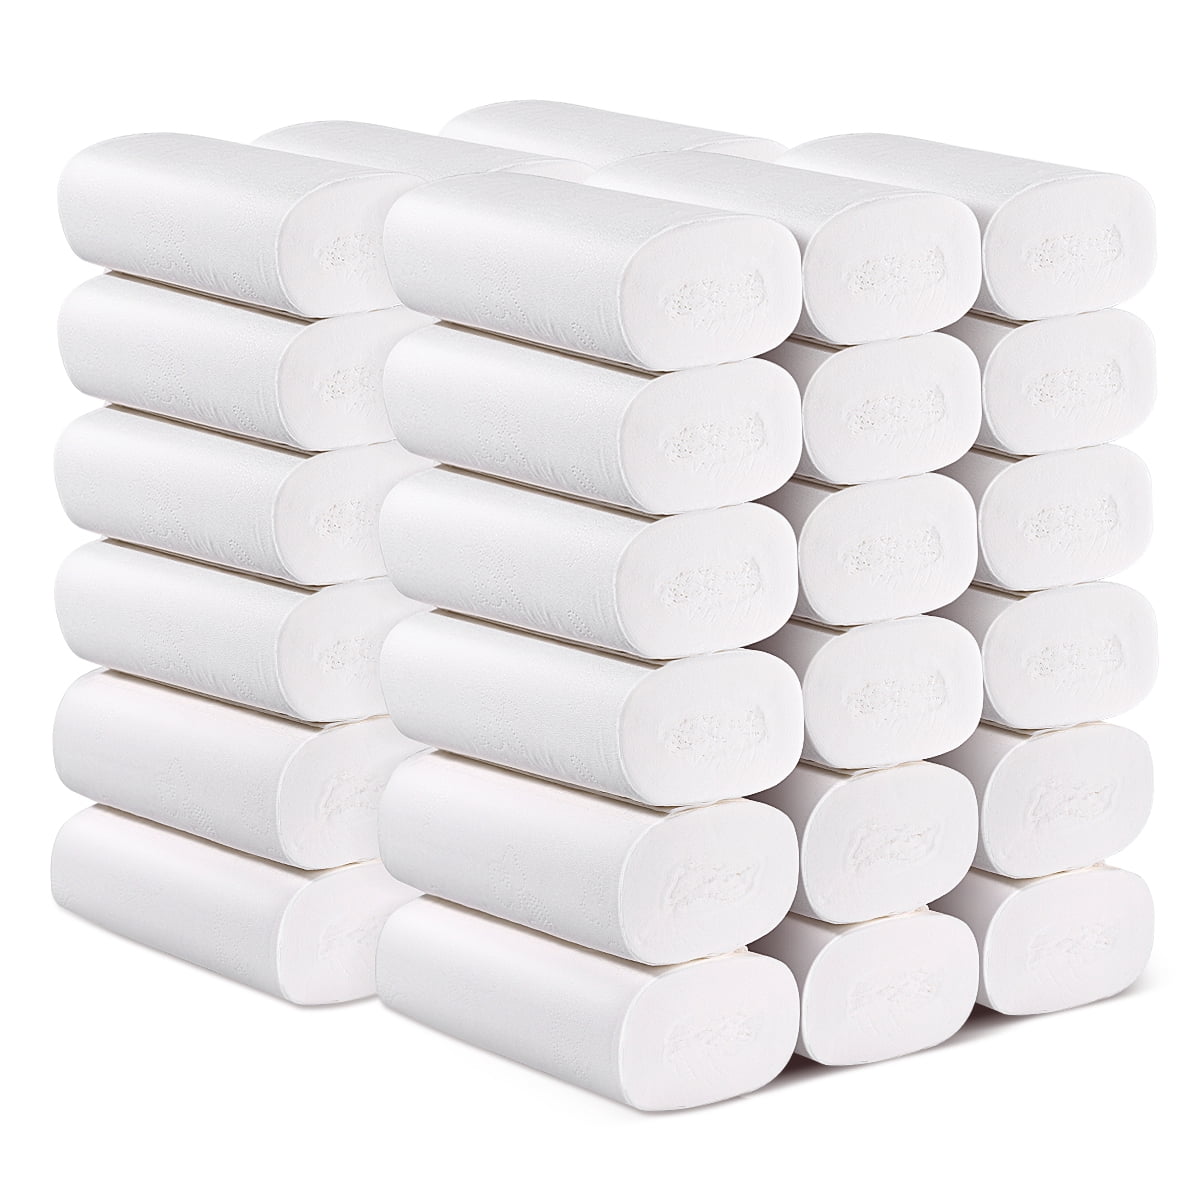 4'' W x 4.1'' L Rolls -Case of 80 Scott Perforated Toilet Tissue 80 NEW White 